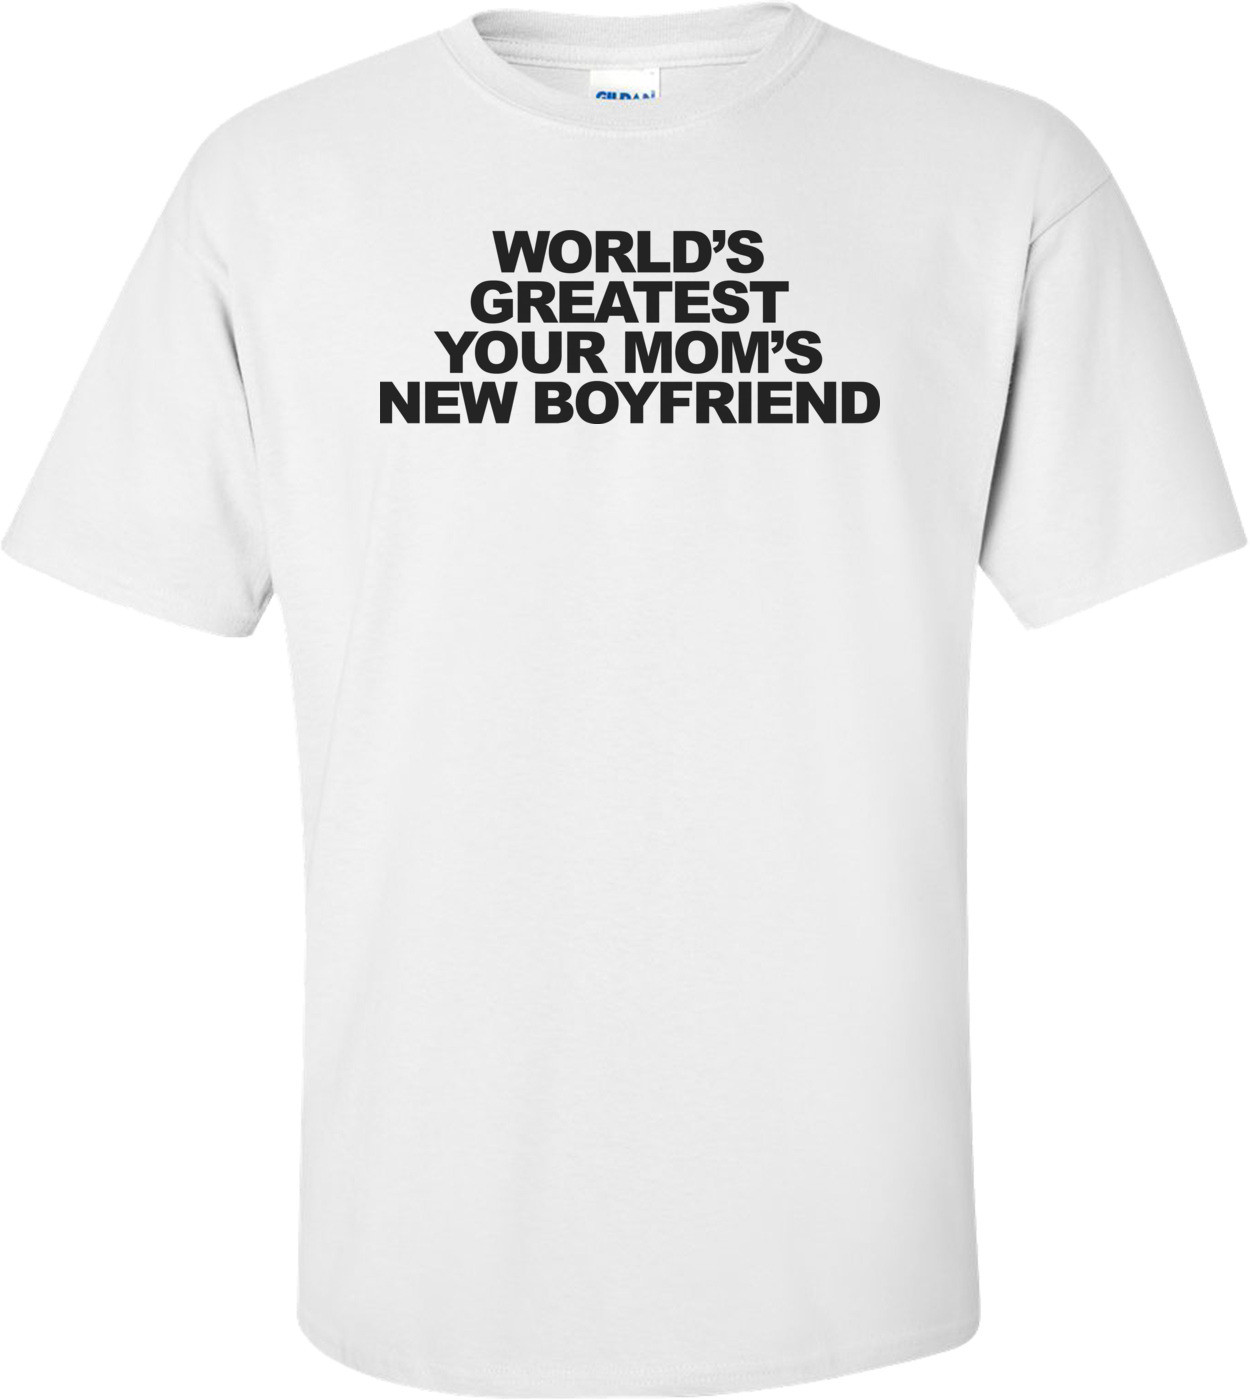 World's Greatest Your Mom's New Boyfriend T-shirt